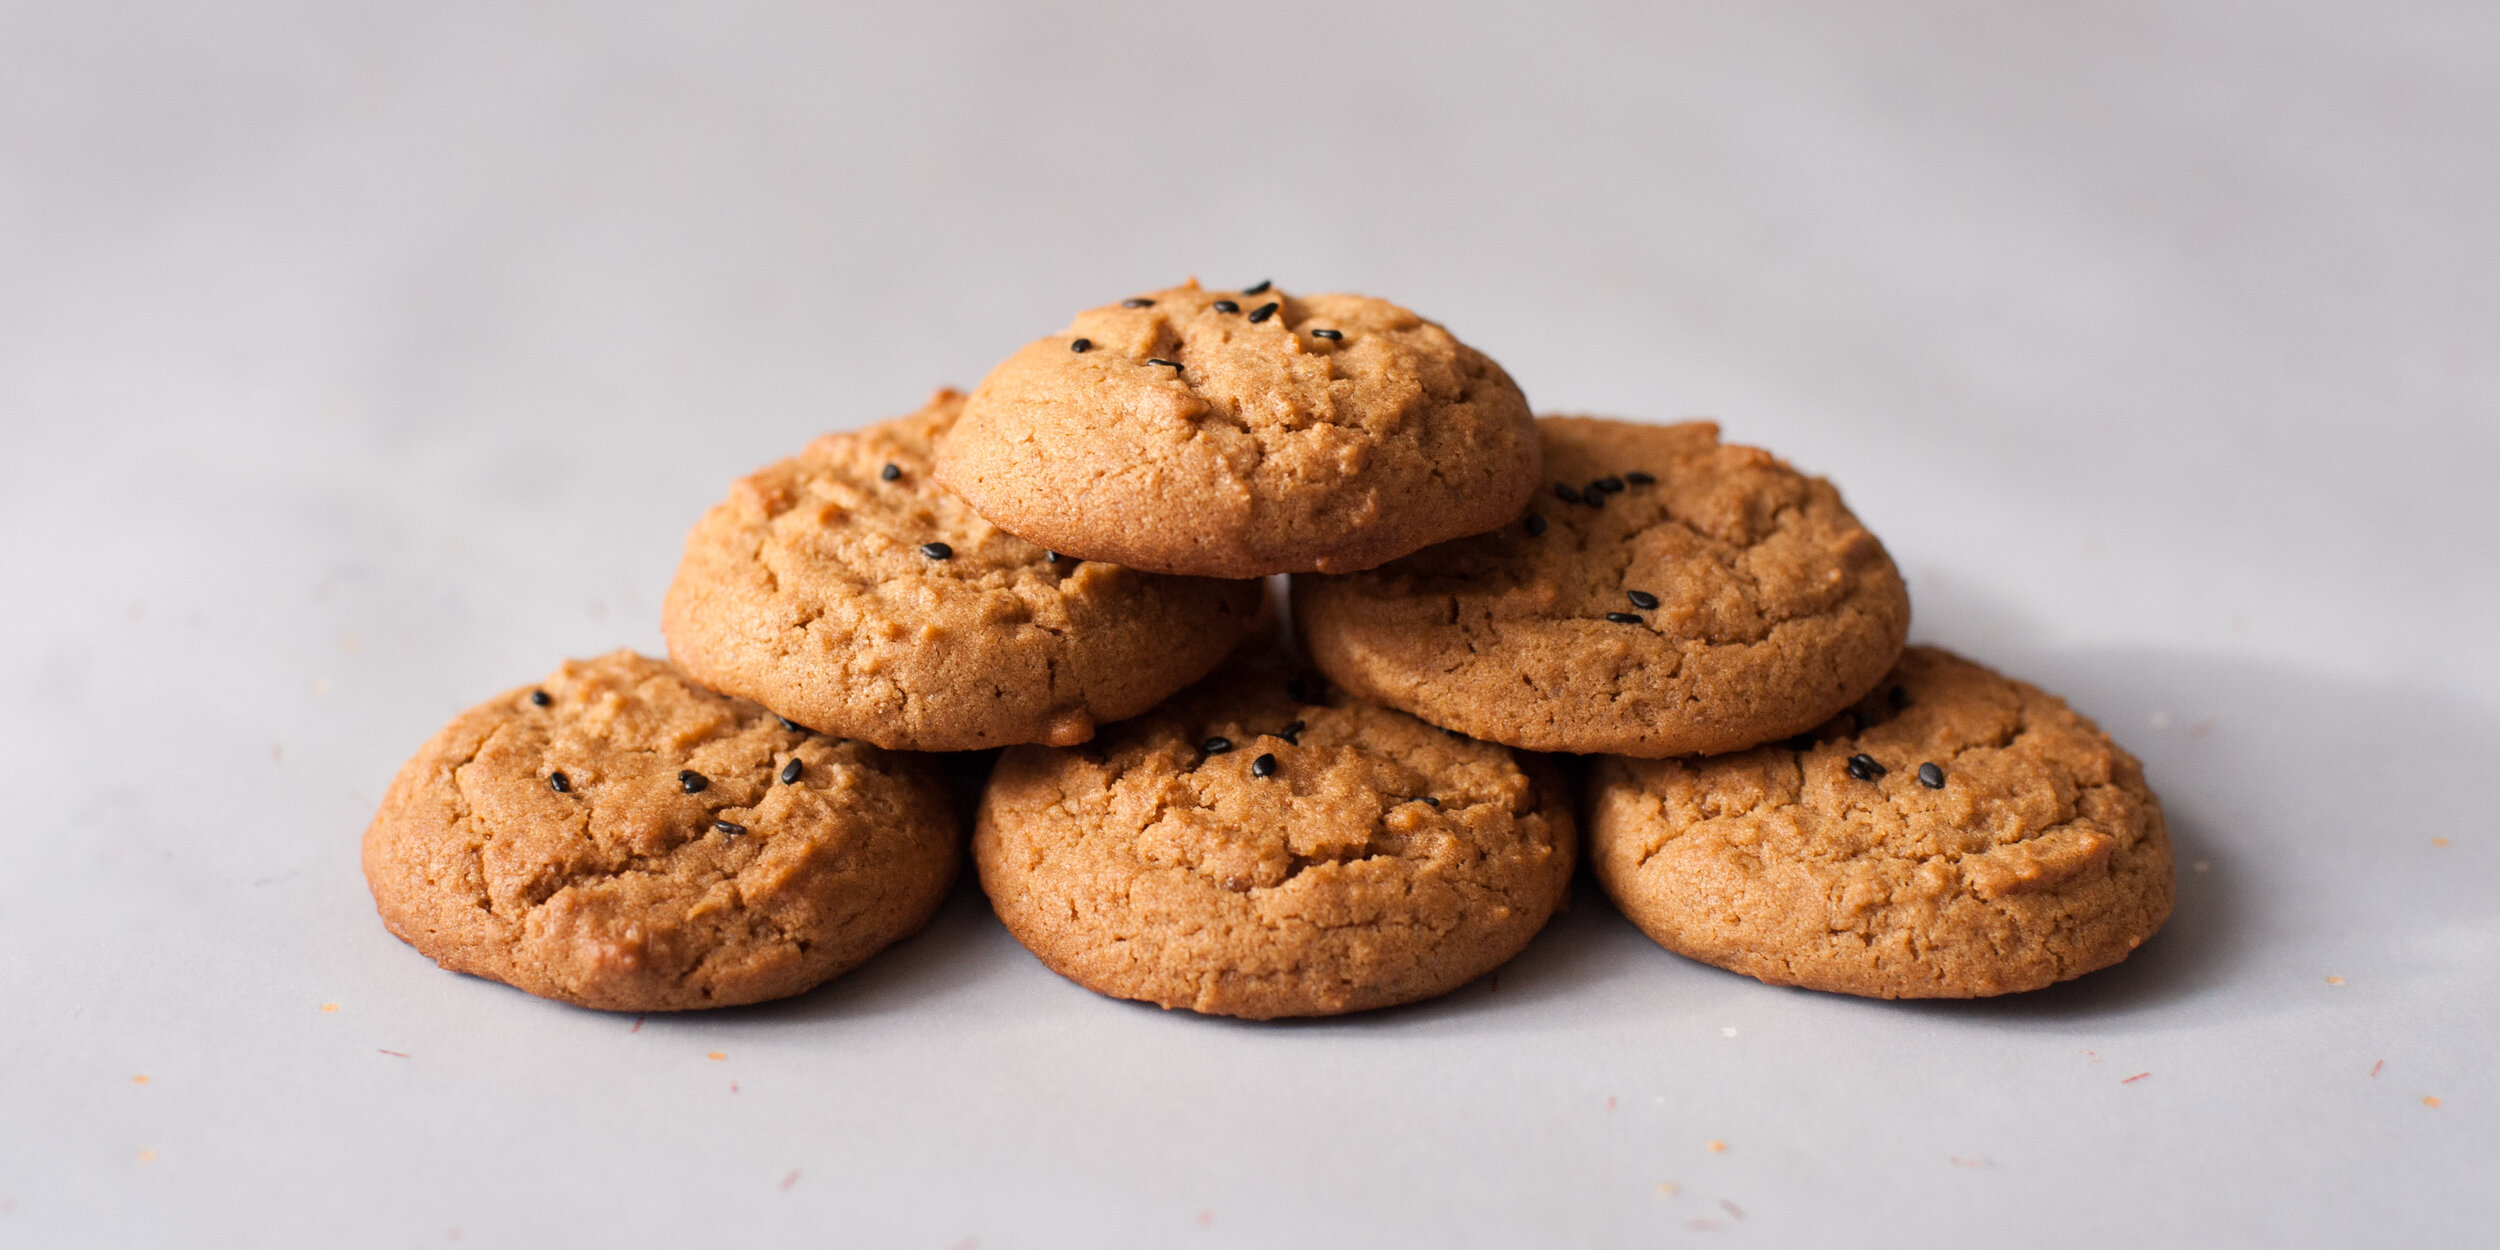 carmens-cookies-peanut-sesame-2021-25.jpg